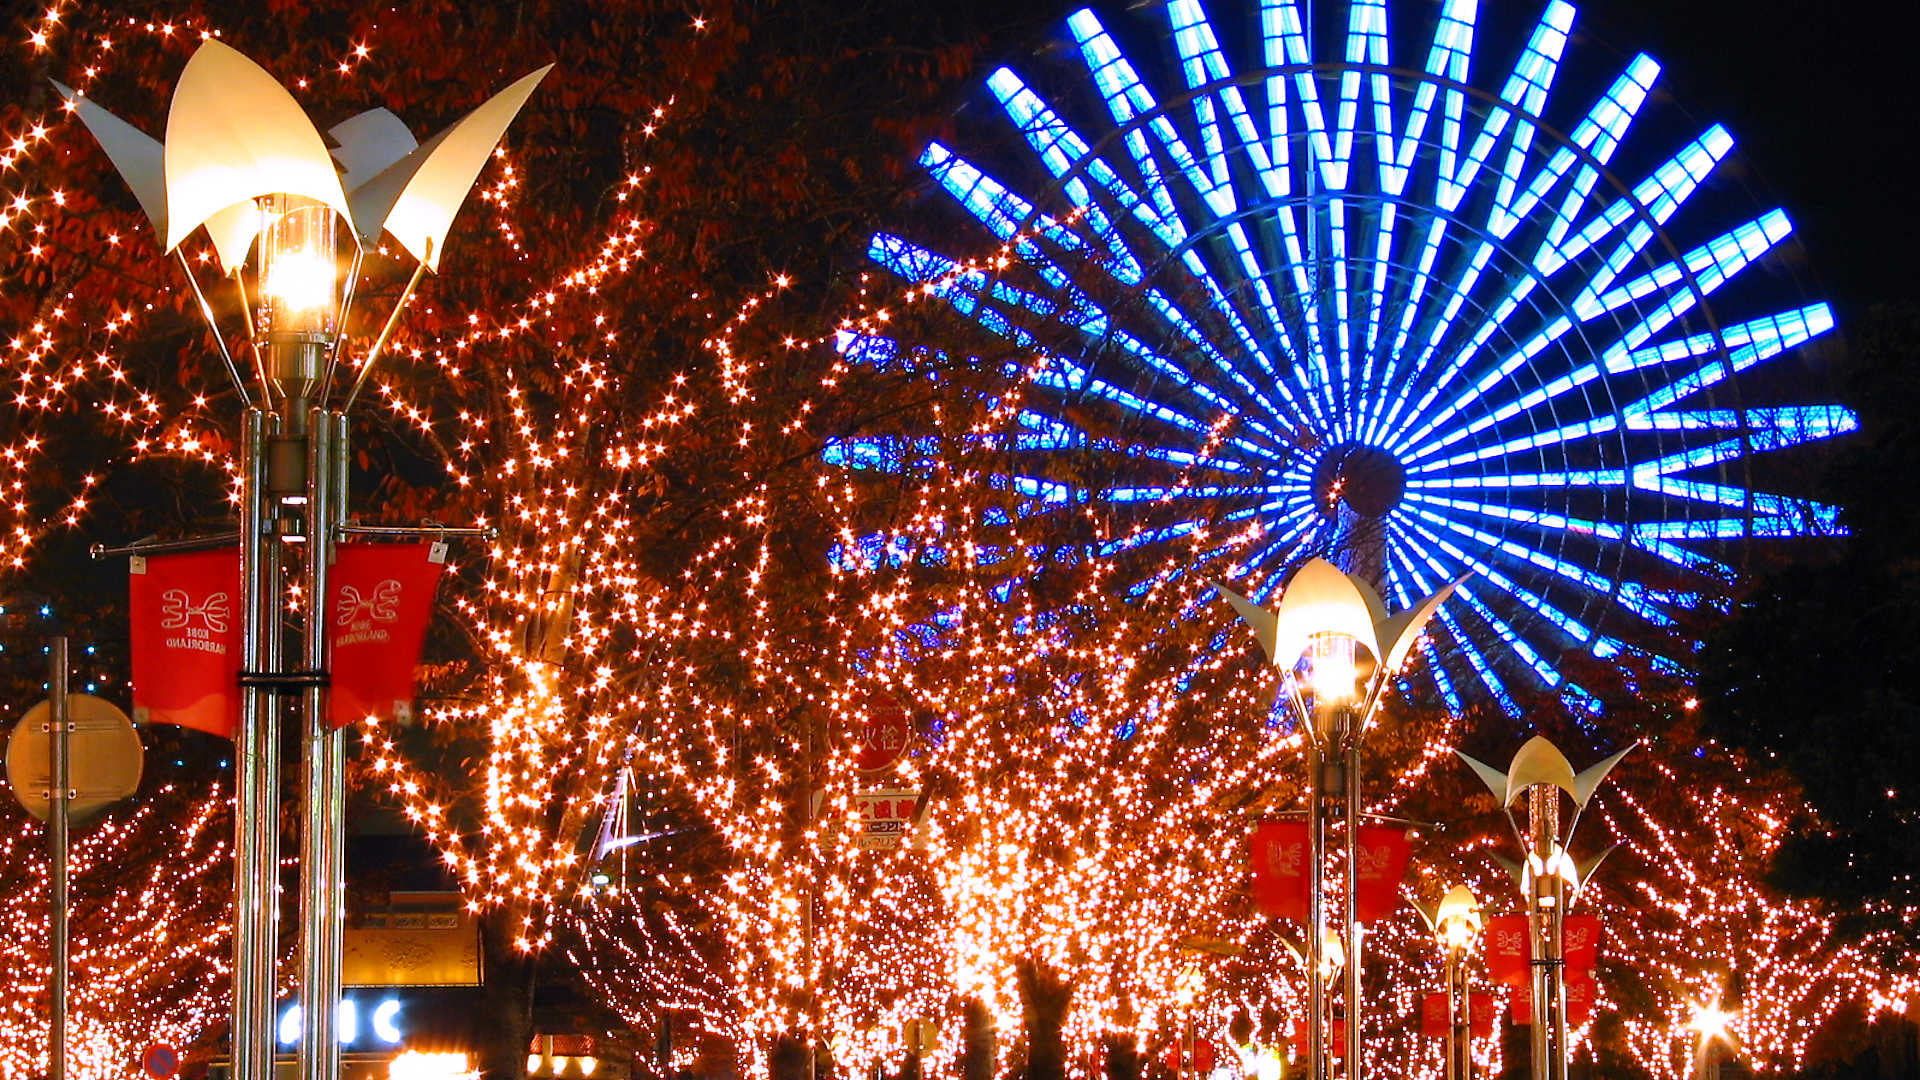 Kobeロマンチックフェア 神戸のクリスマスイルミネーション